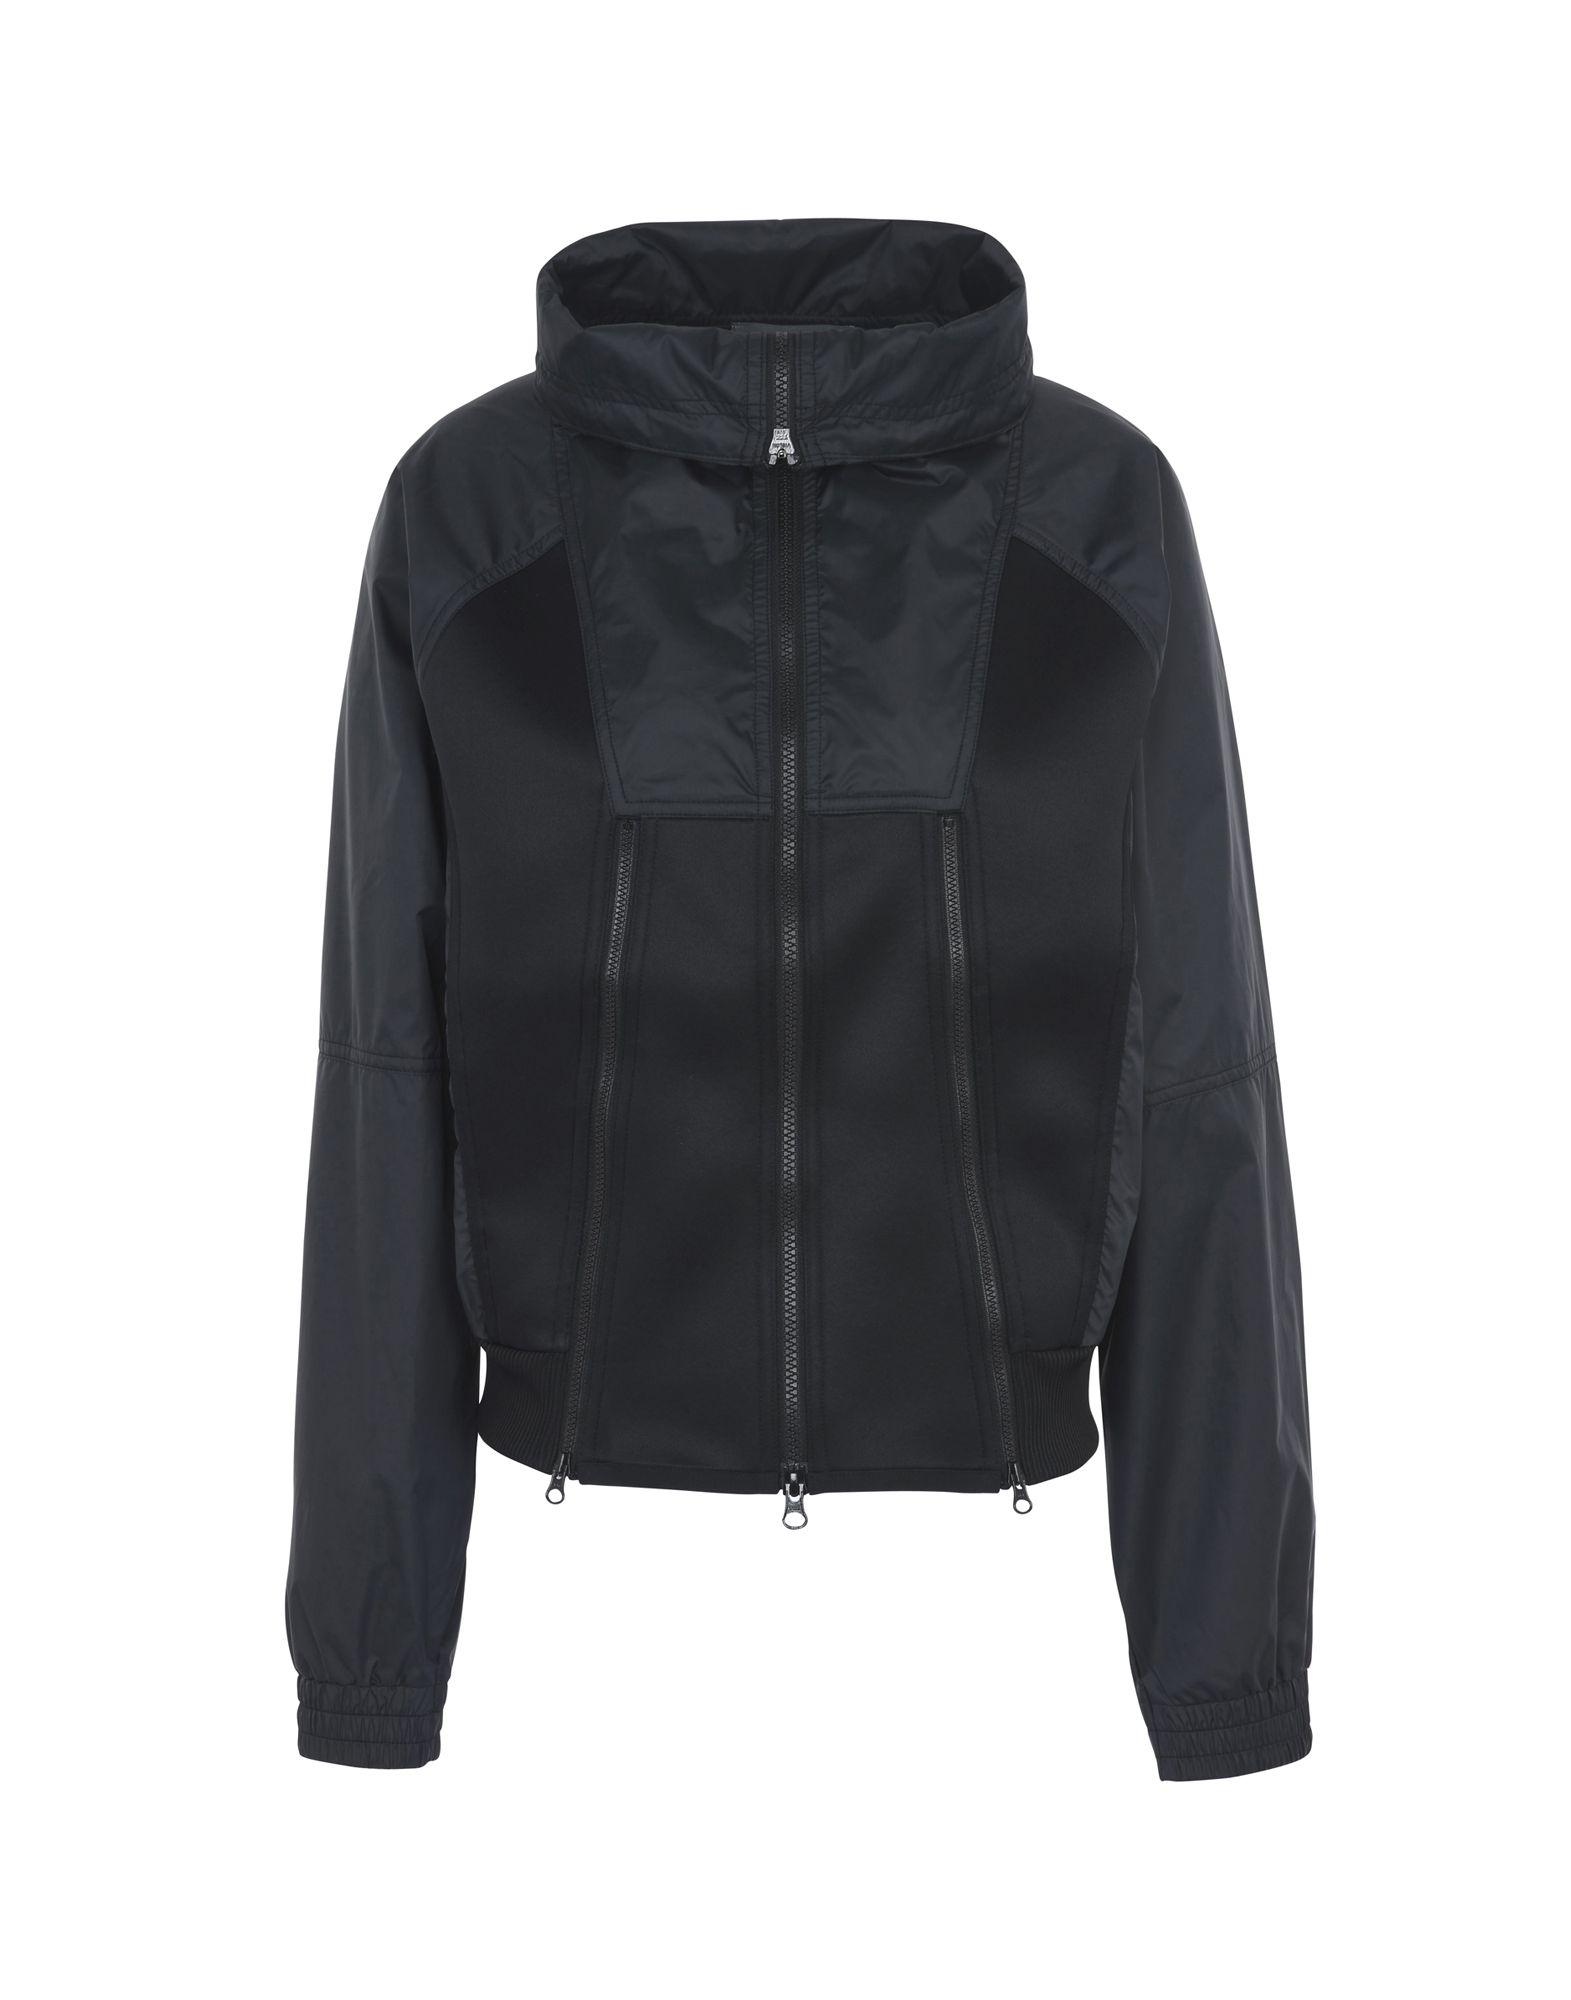 Adidas By Stella Mccartney Jacket In Black | ModeSens